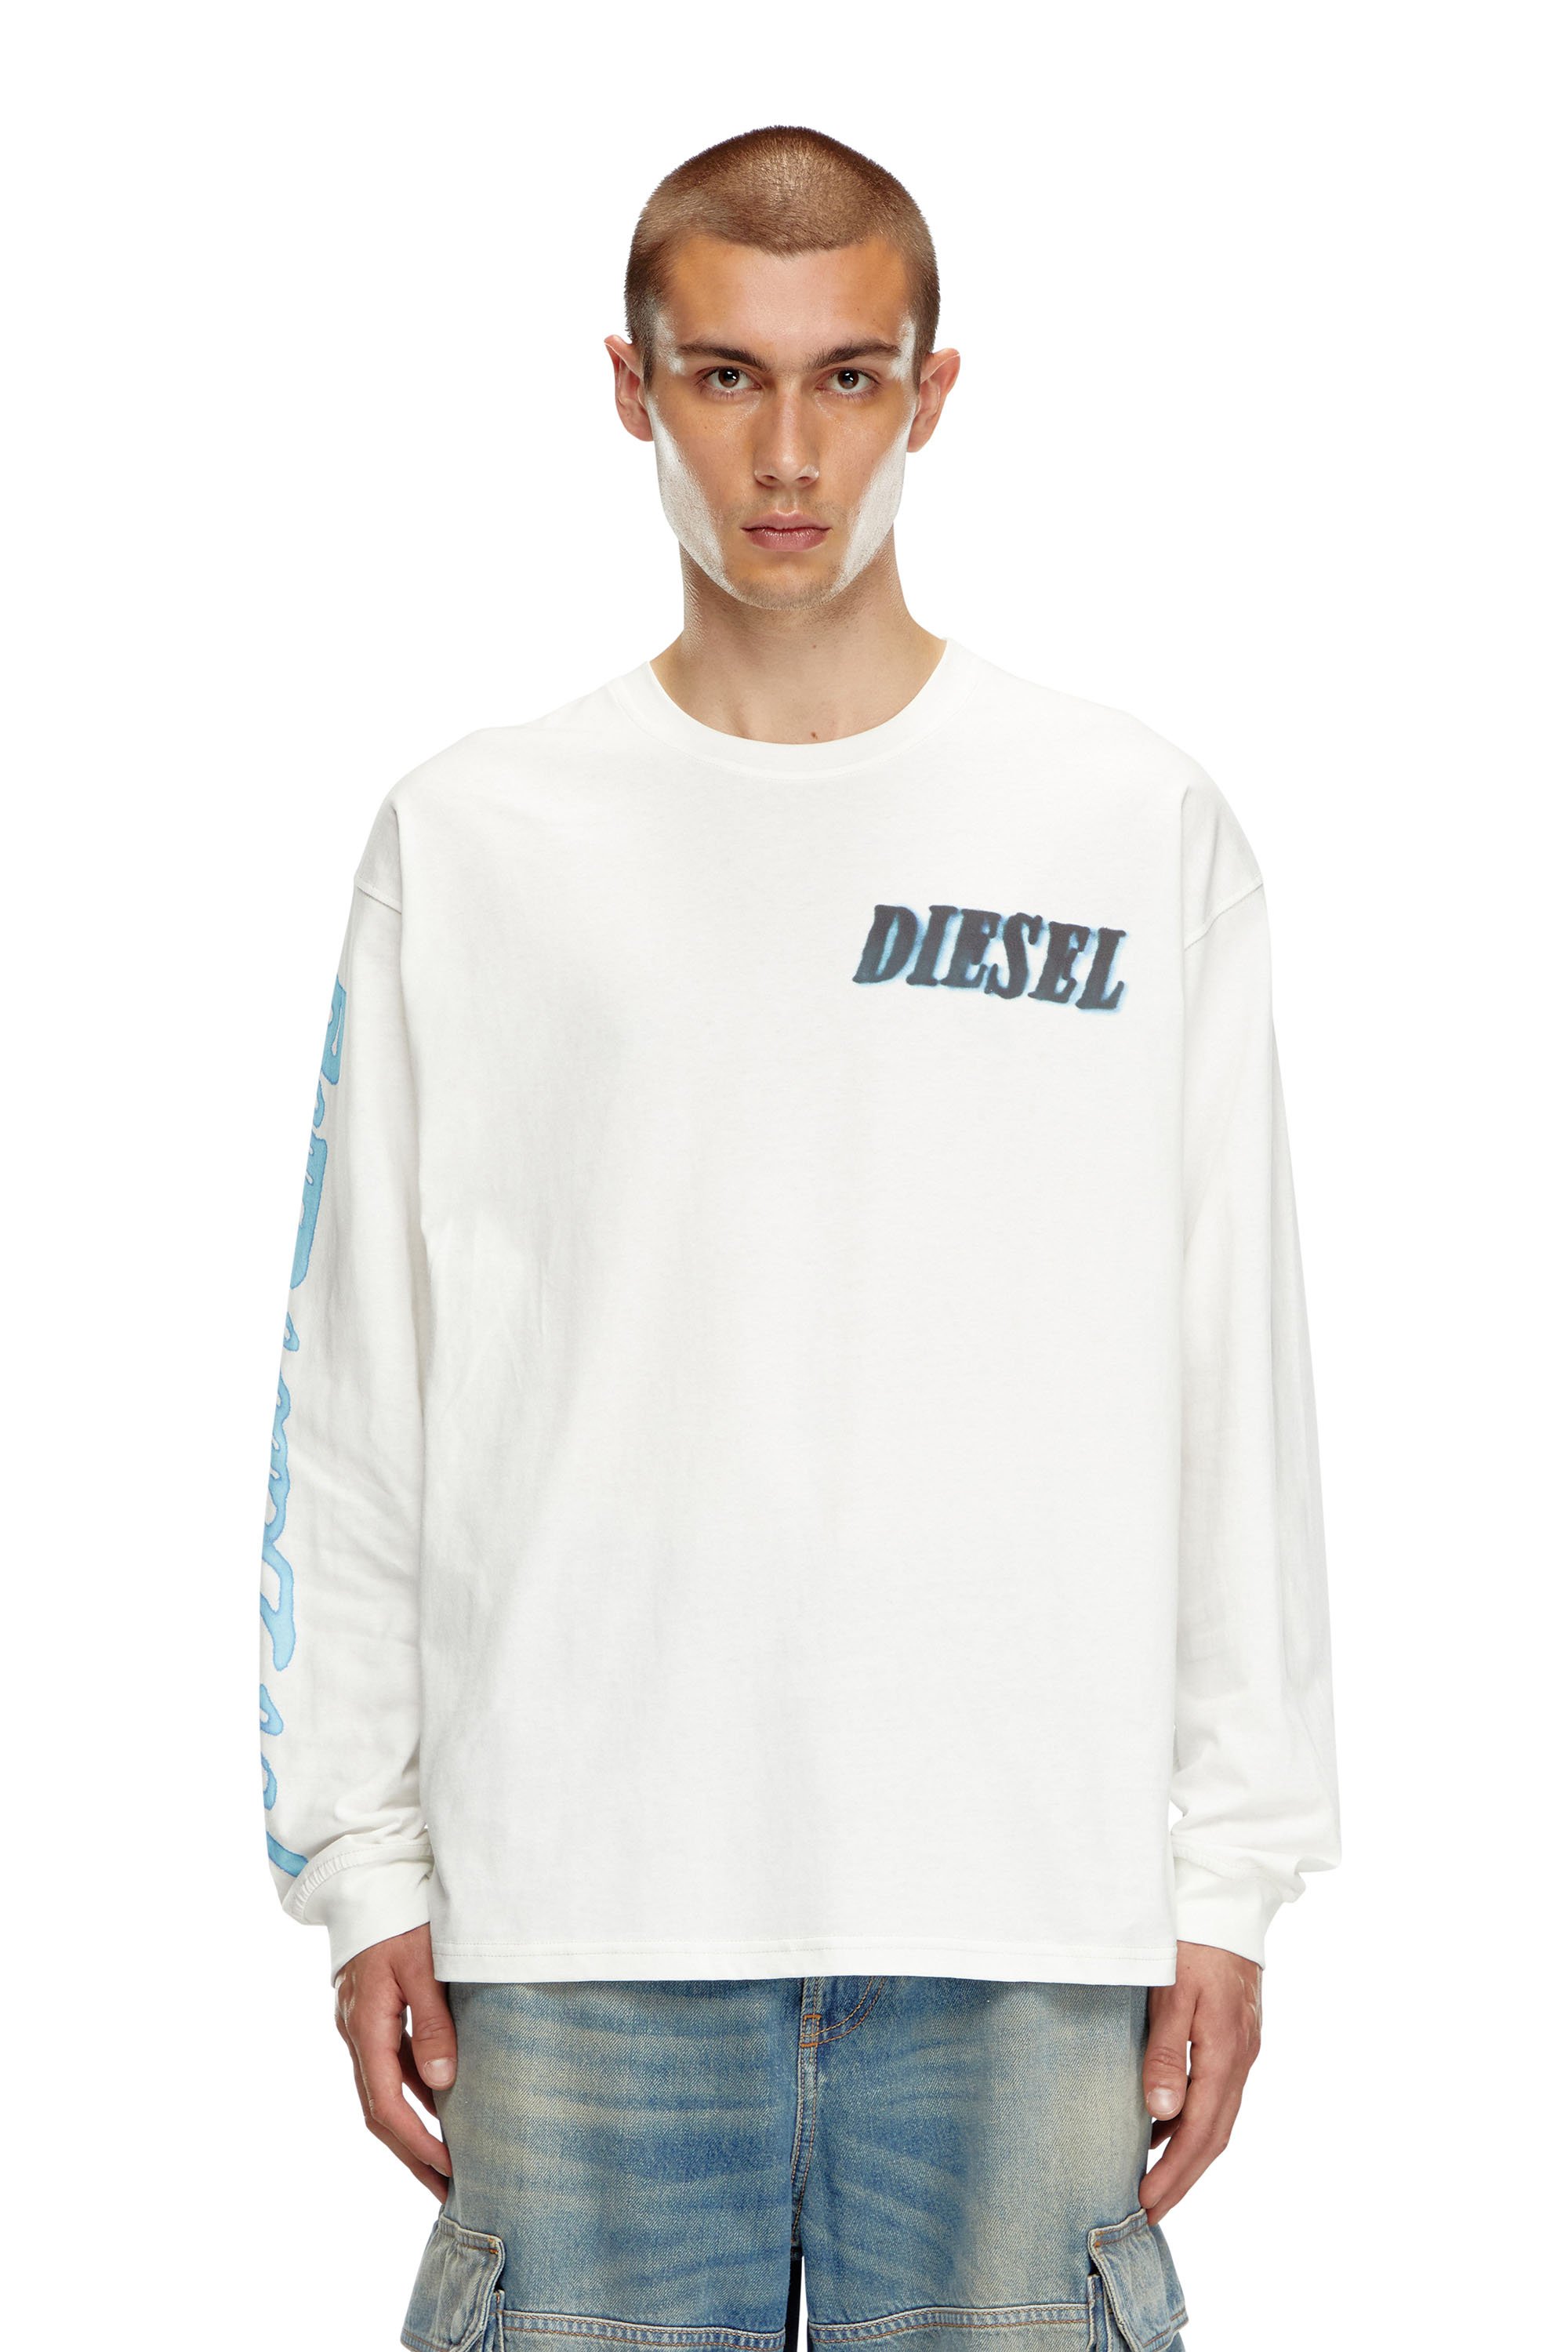 Diesel - T-BOXT-LS-Q15, Uomo T-shirt a maniche lunghe con stampe logo in Bianco - Image 1